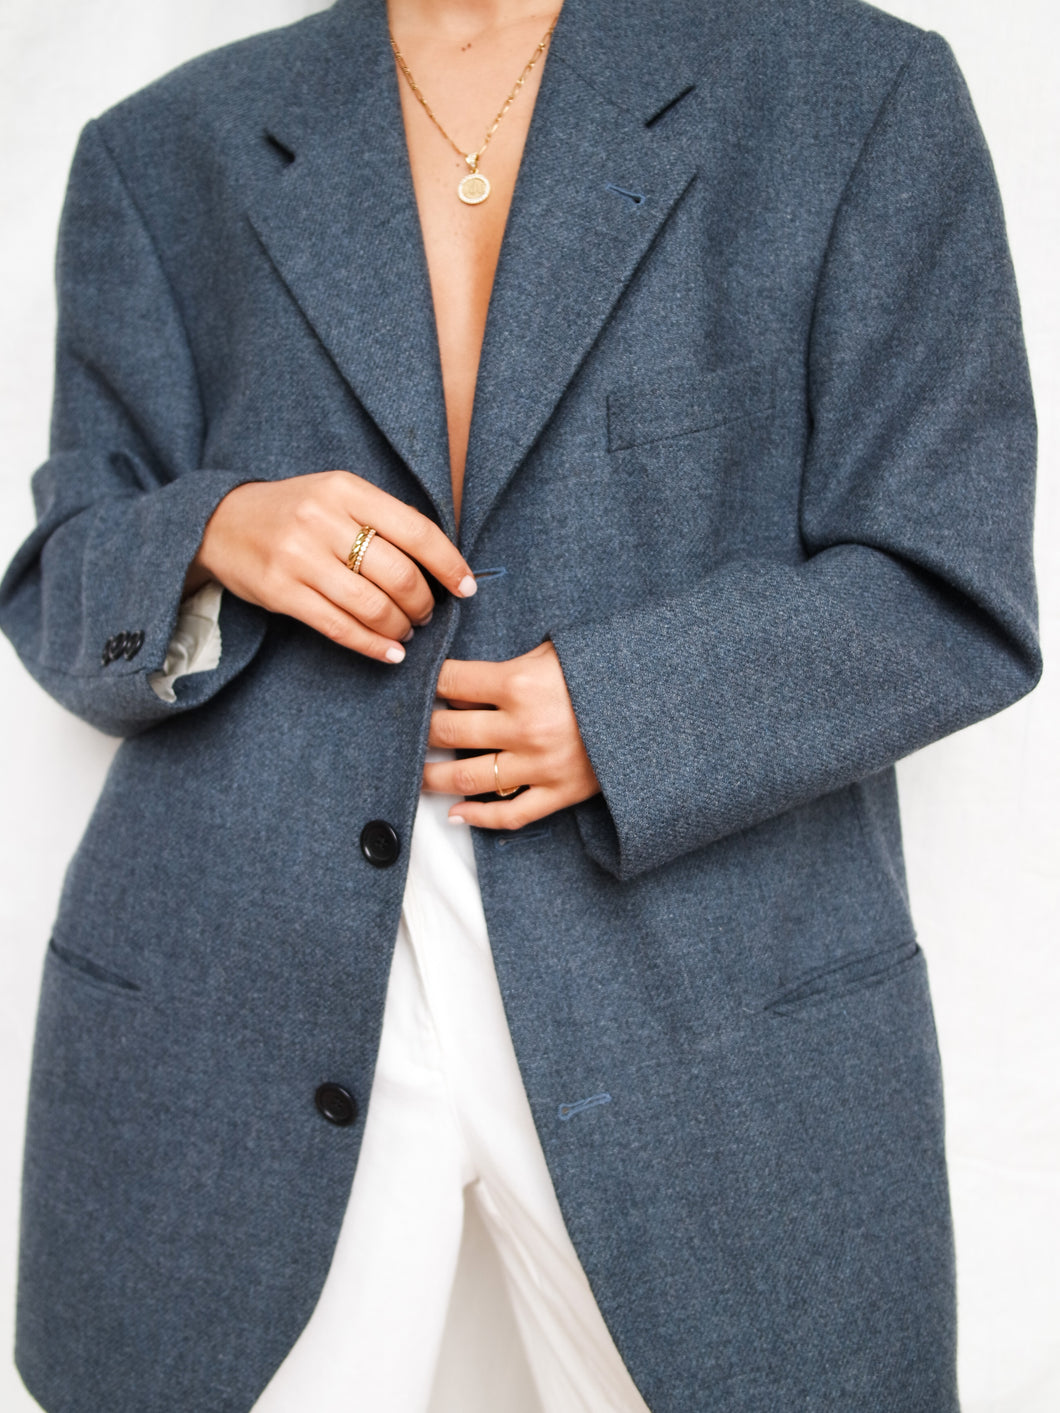 KENZO grey/blue blazer (L men)